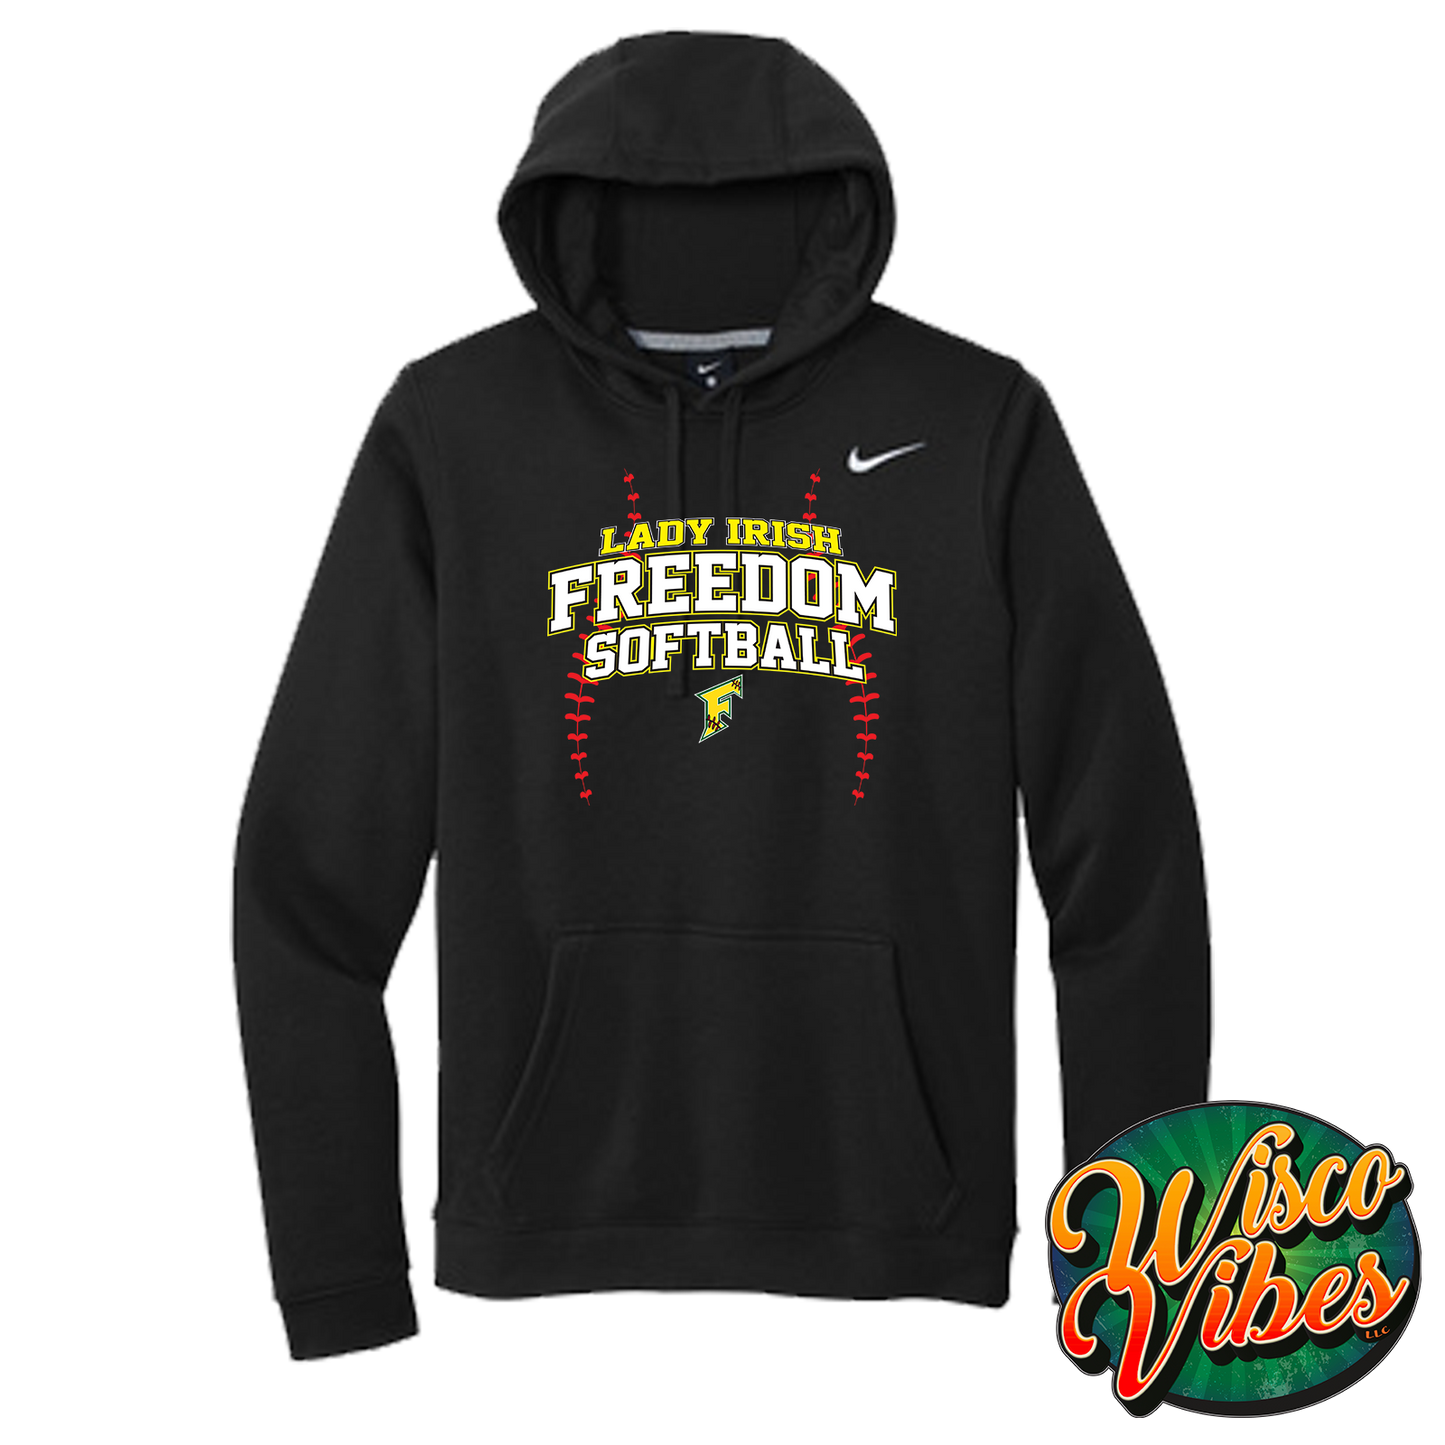 Nike Freedom Freedom Fastpitch Stitches Hooded Sweatshirt